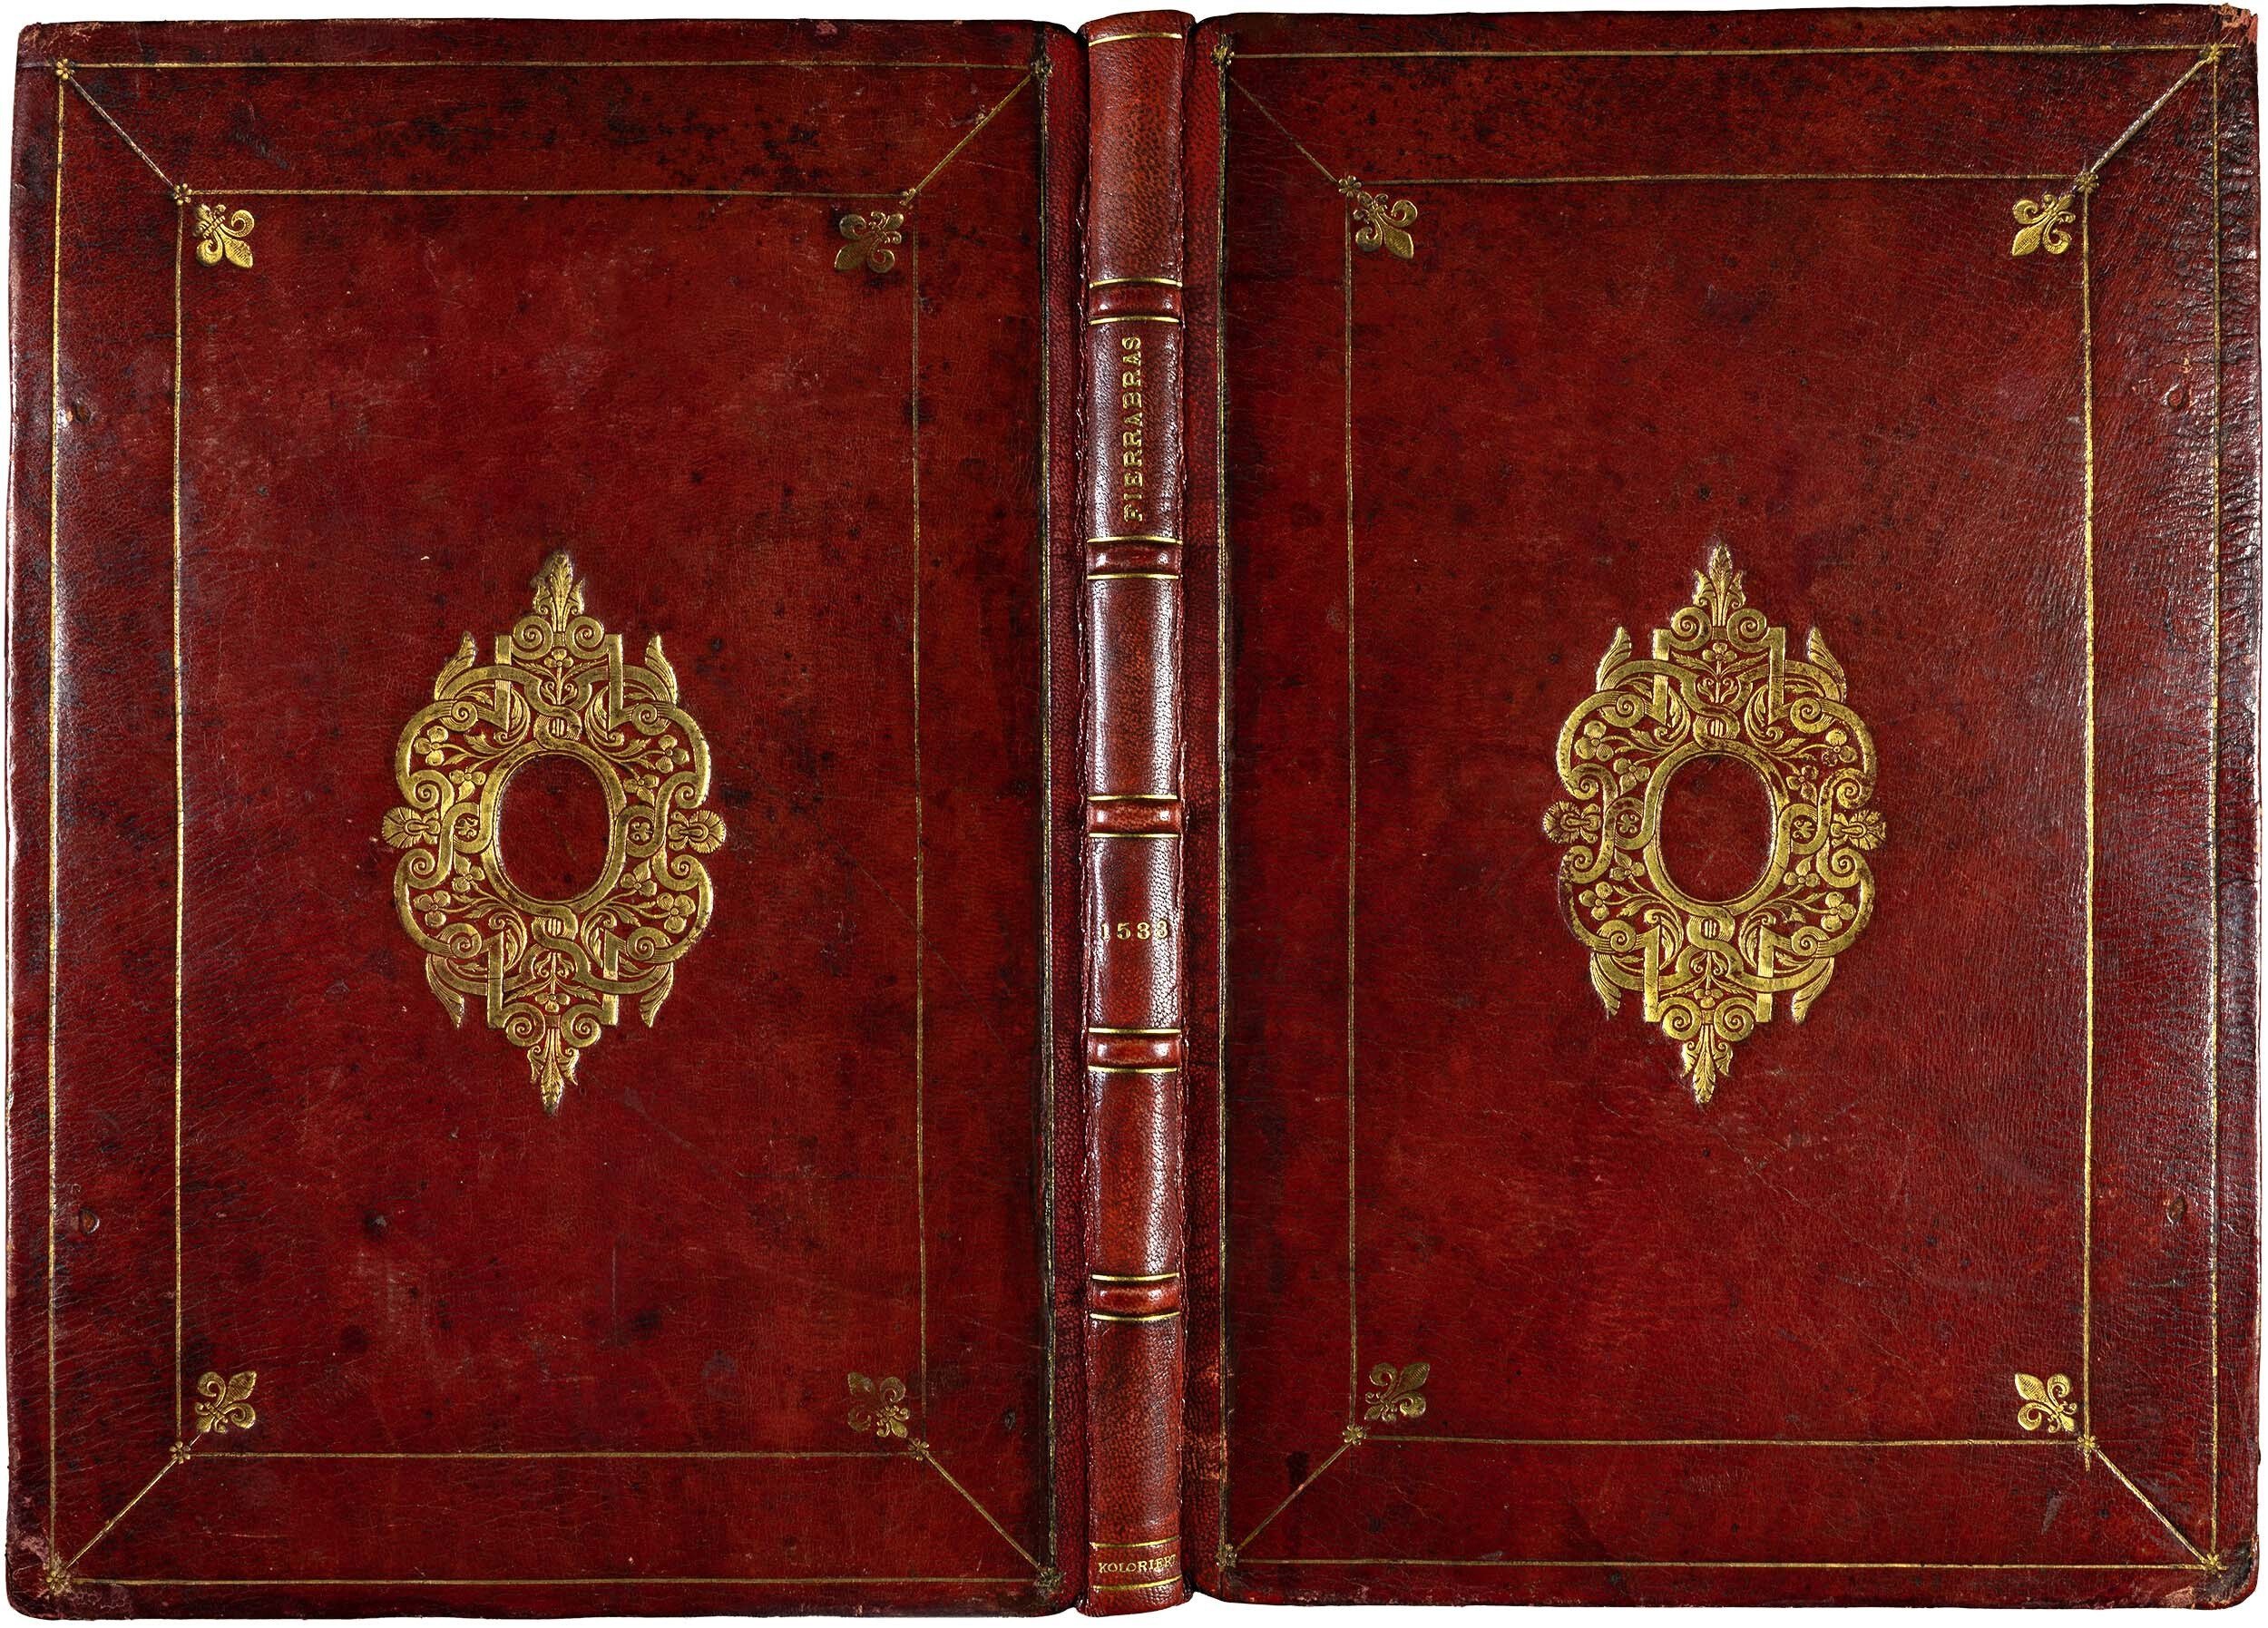 Fierabras-1533-first-german-edition-original-hand-coloured-Johann-II-volksbuch-01-korr.jpg